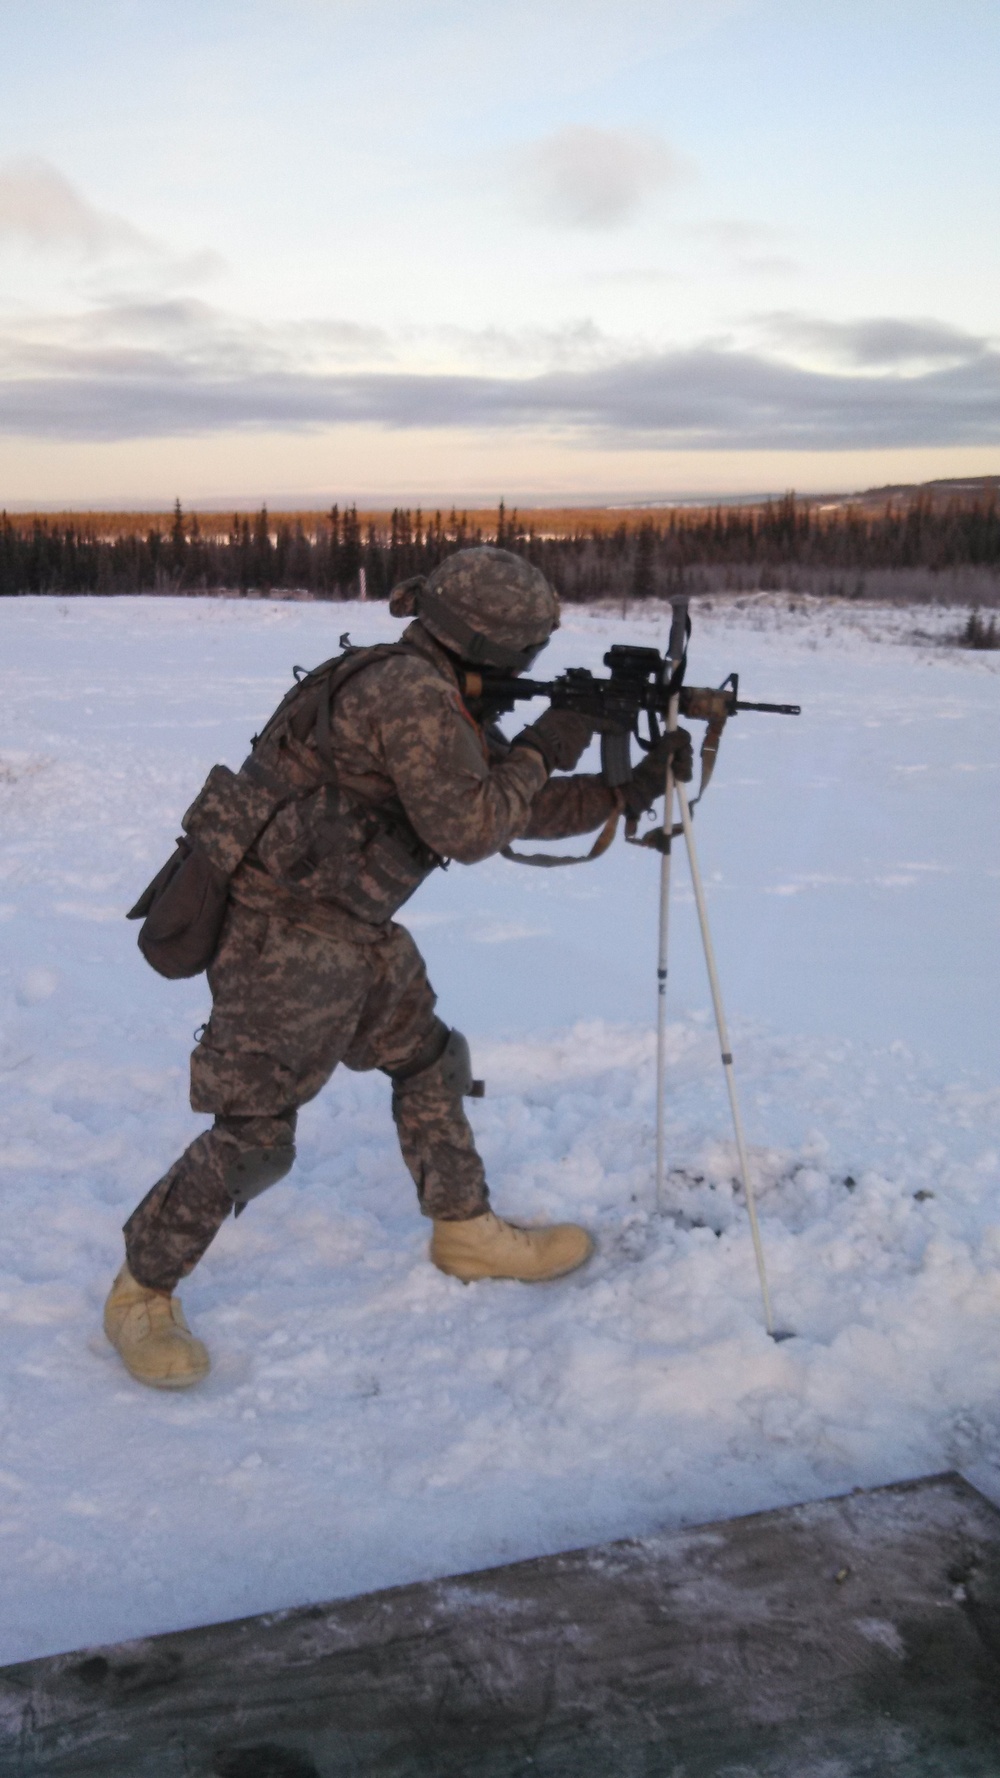 1-24 Infantry trains on arctic tasks